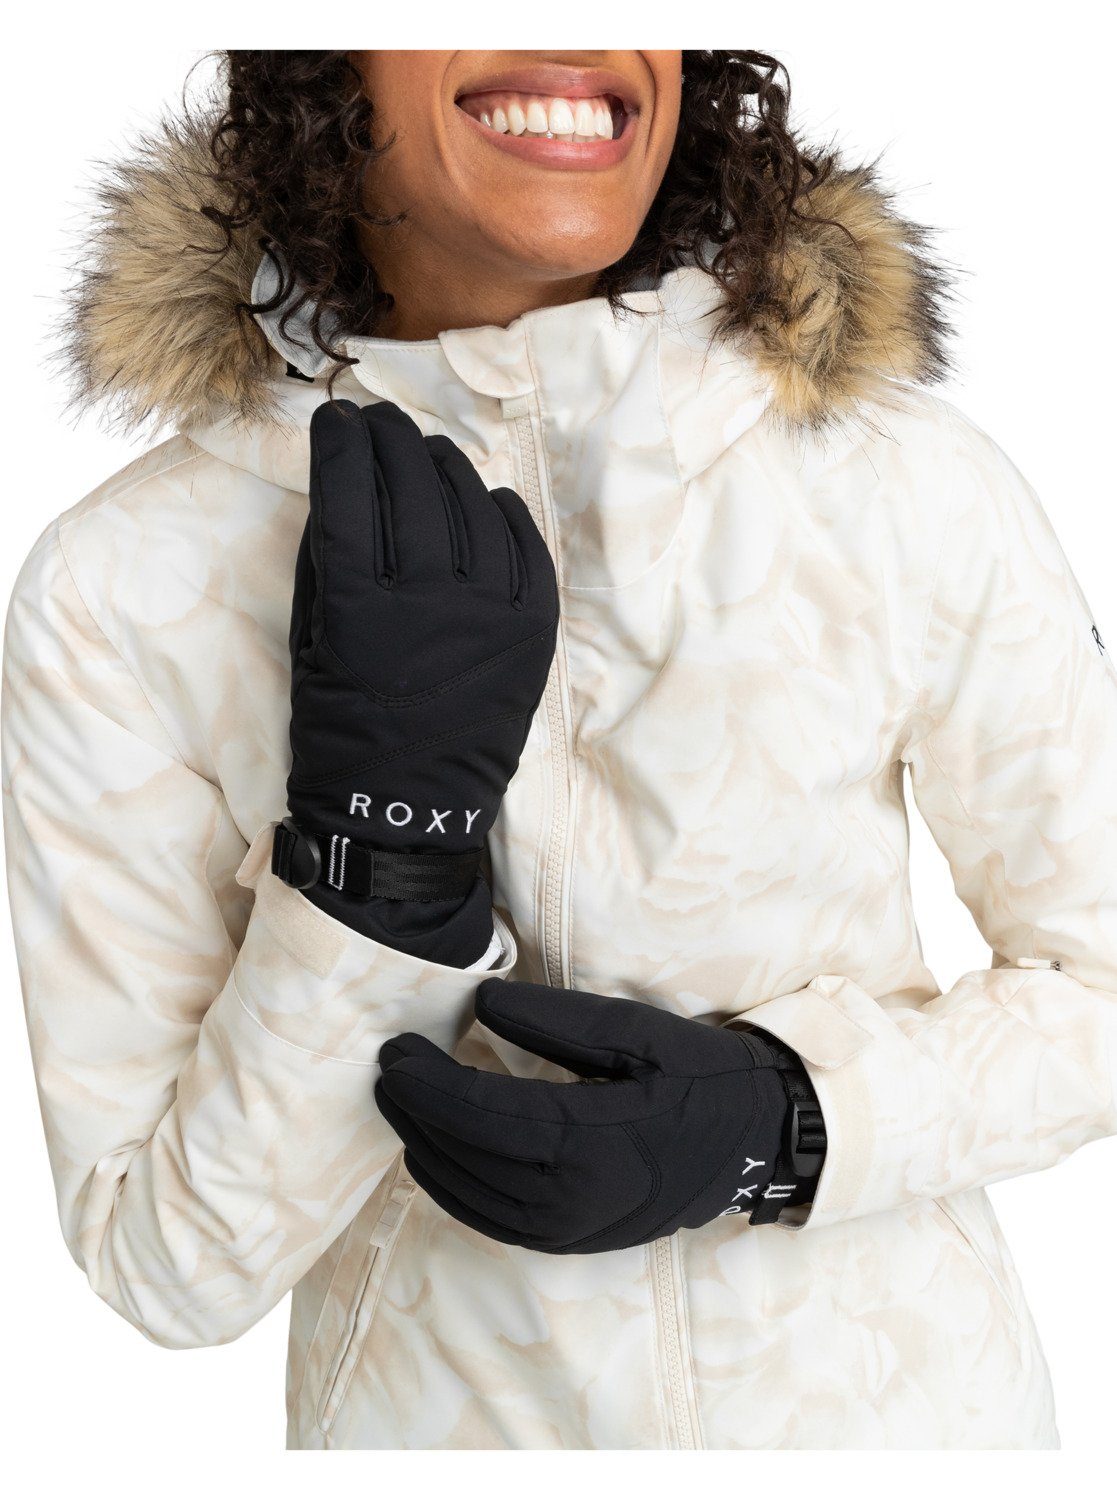 Roxy Snowboardhandschuhe ROXY Jetty True Black